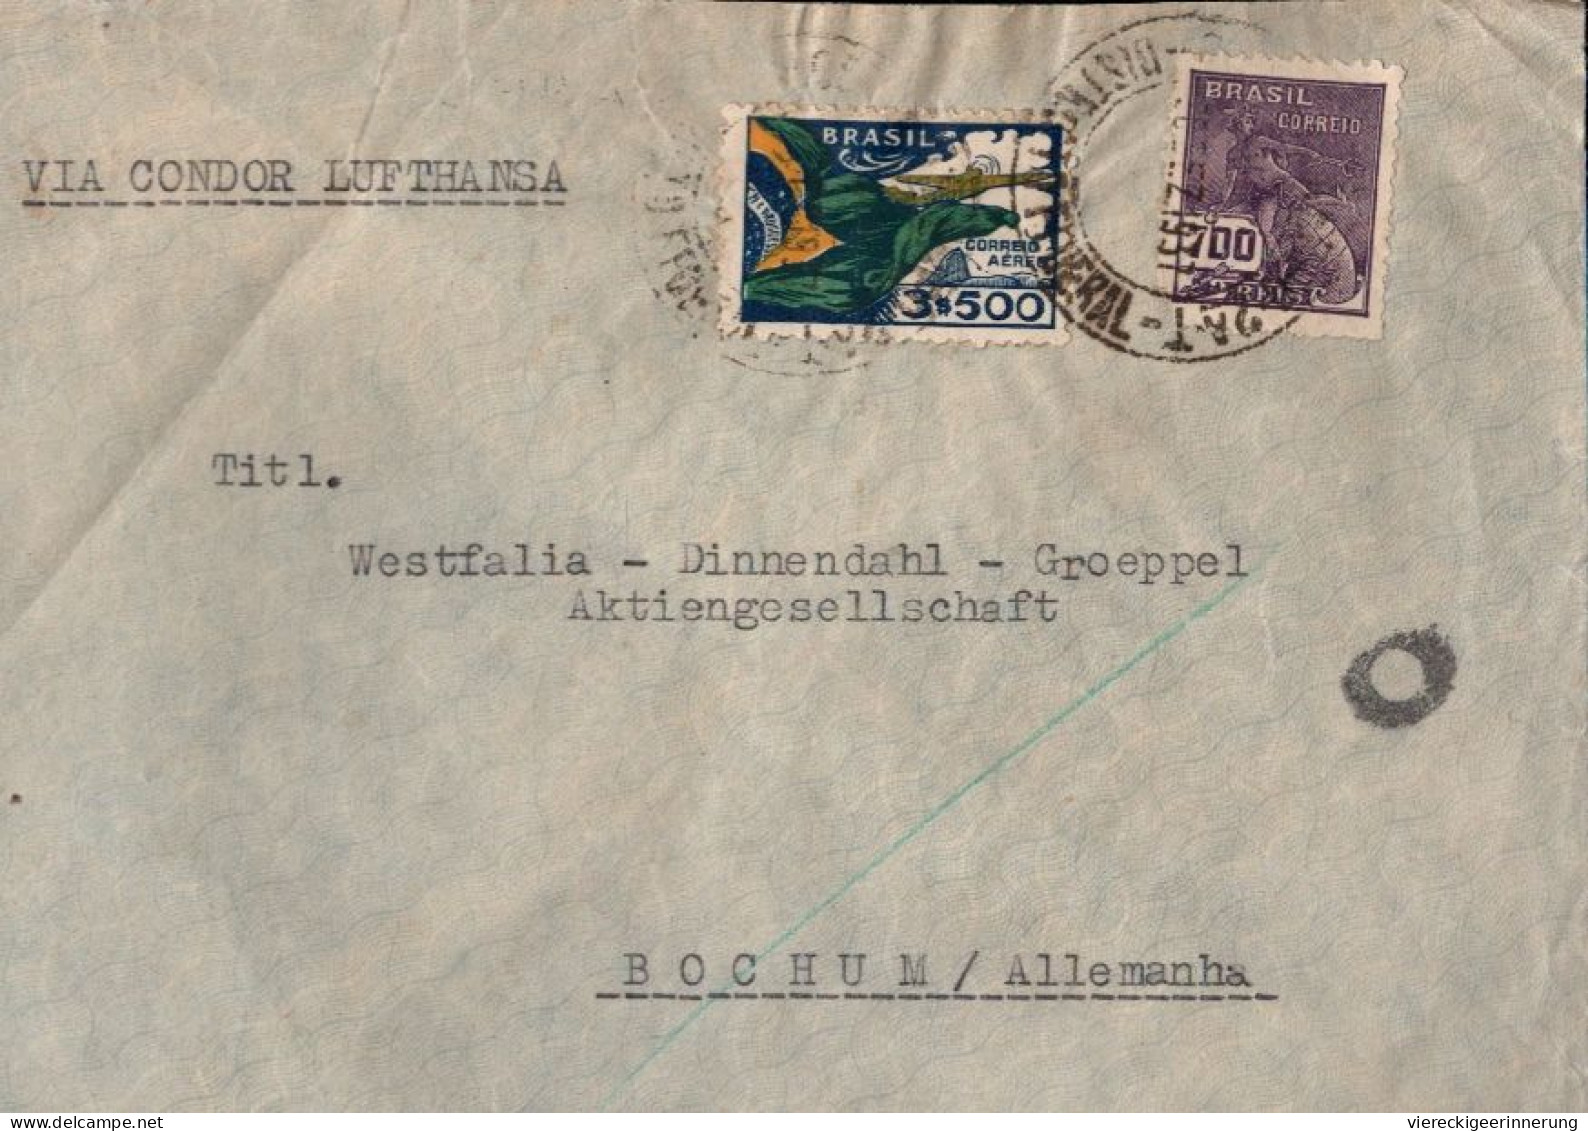 ! Luftpostbrief, Airmail Cover, 1937 Aus Rio De Janeiro, Brasilien, Via Condor Lufthansa, Nach Bochum - Posta Aerea